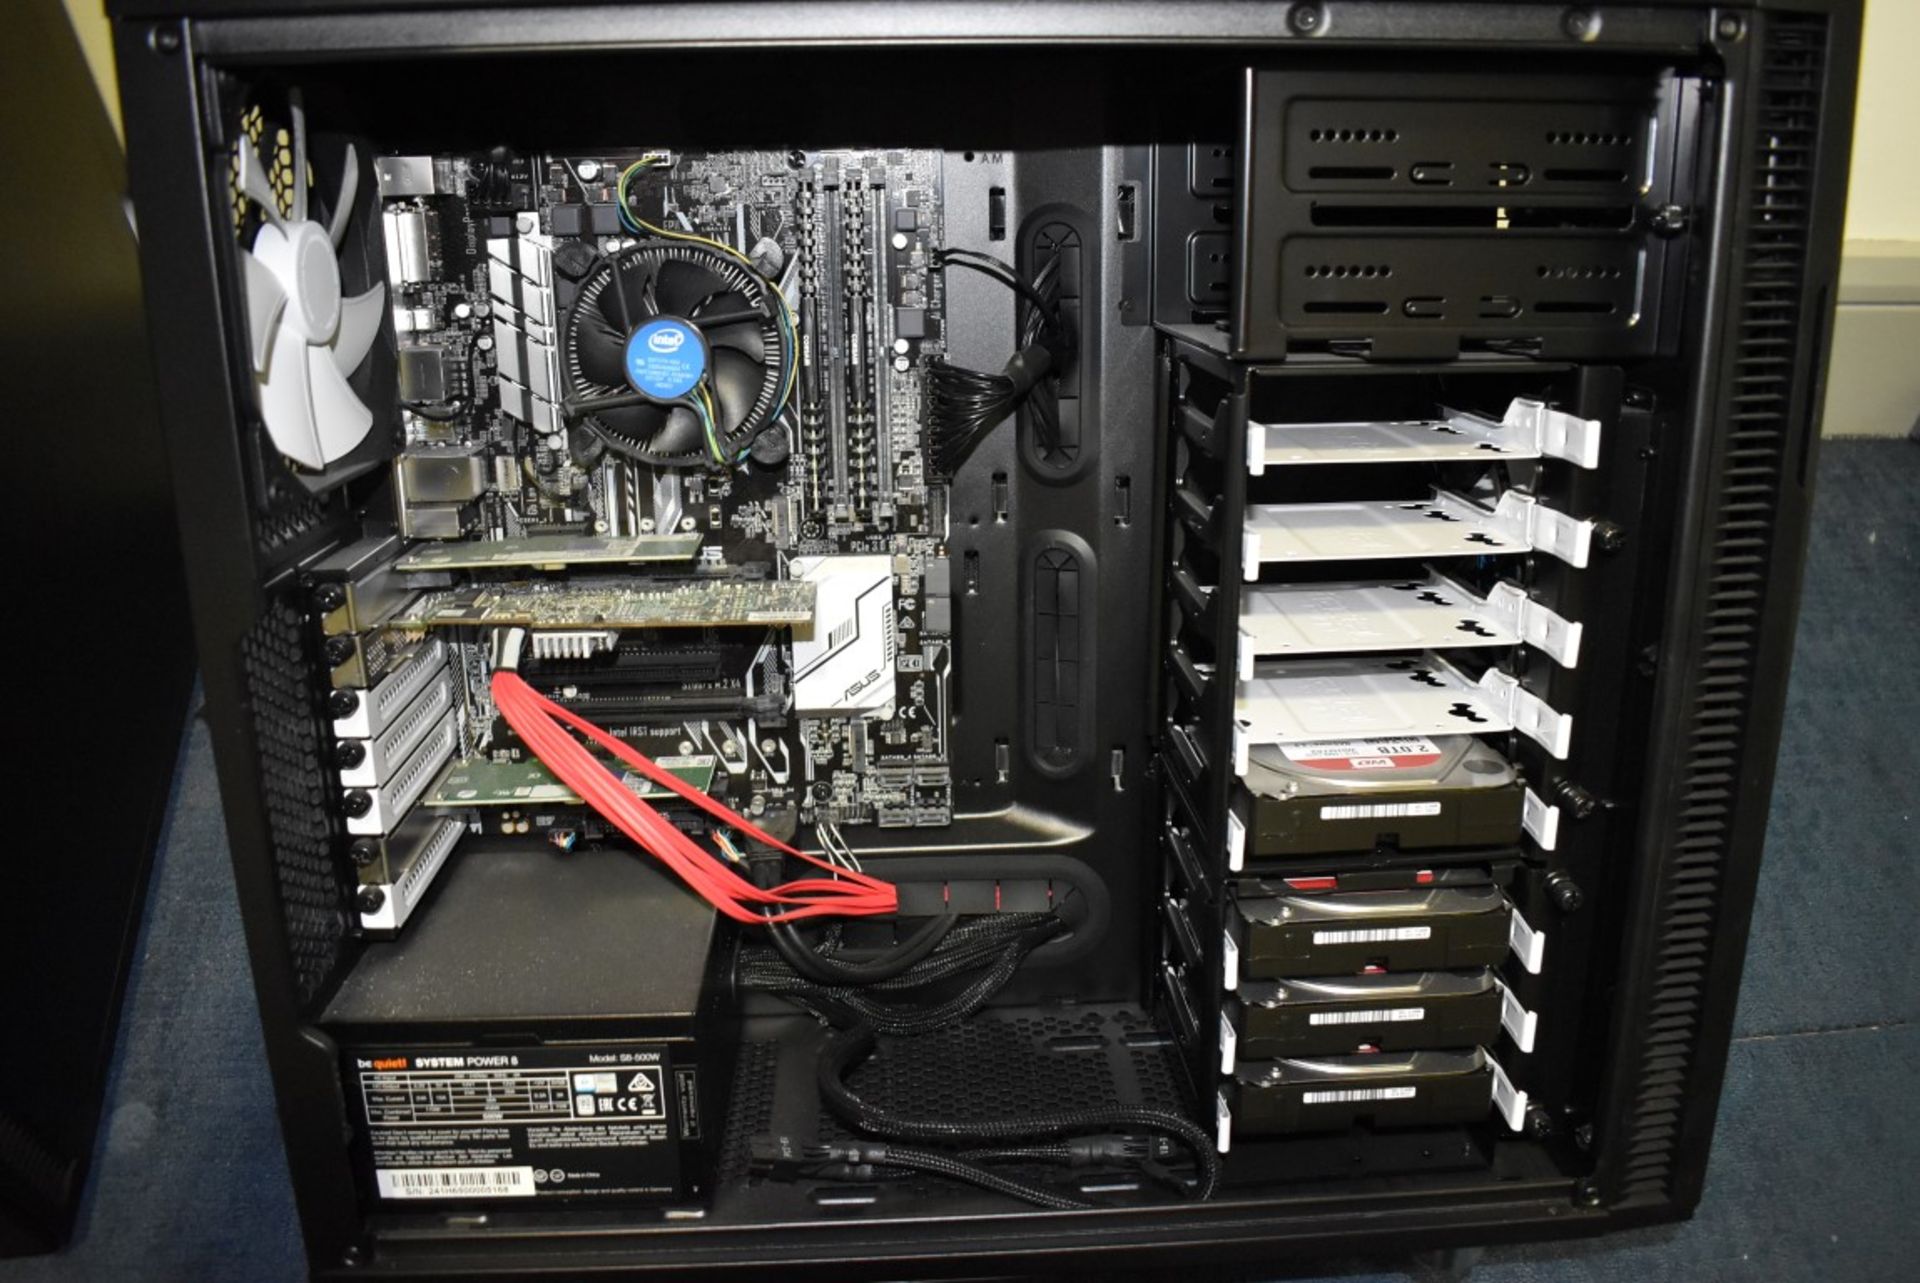 1 x Desktop PC Server Featuring an Intel i7-6700 Processor, 16gb DDR4 Ram, BeQuiet 500w PSU - Image 4 of 10